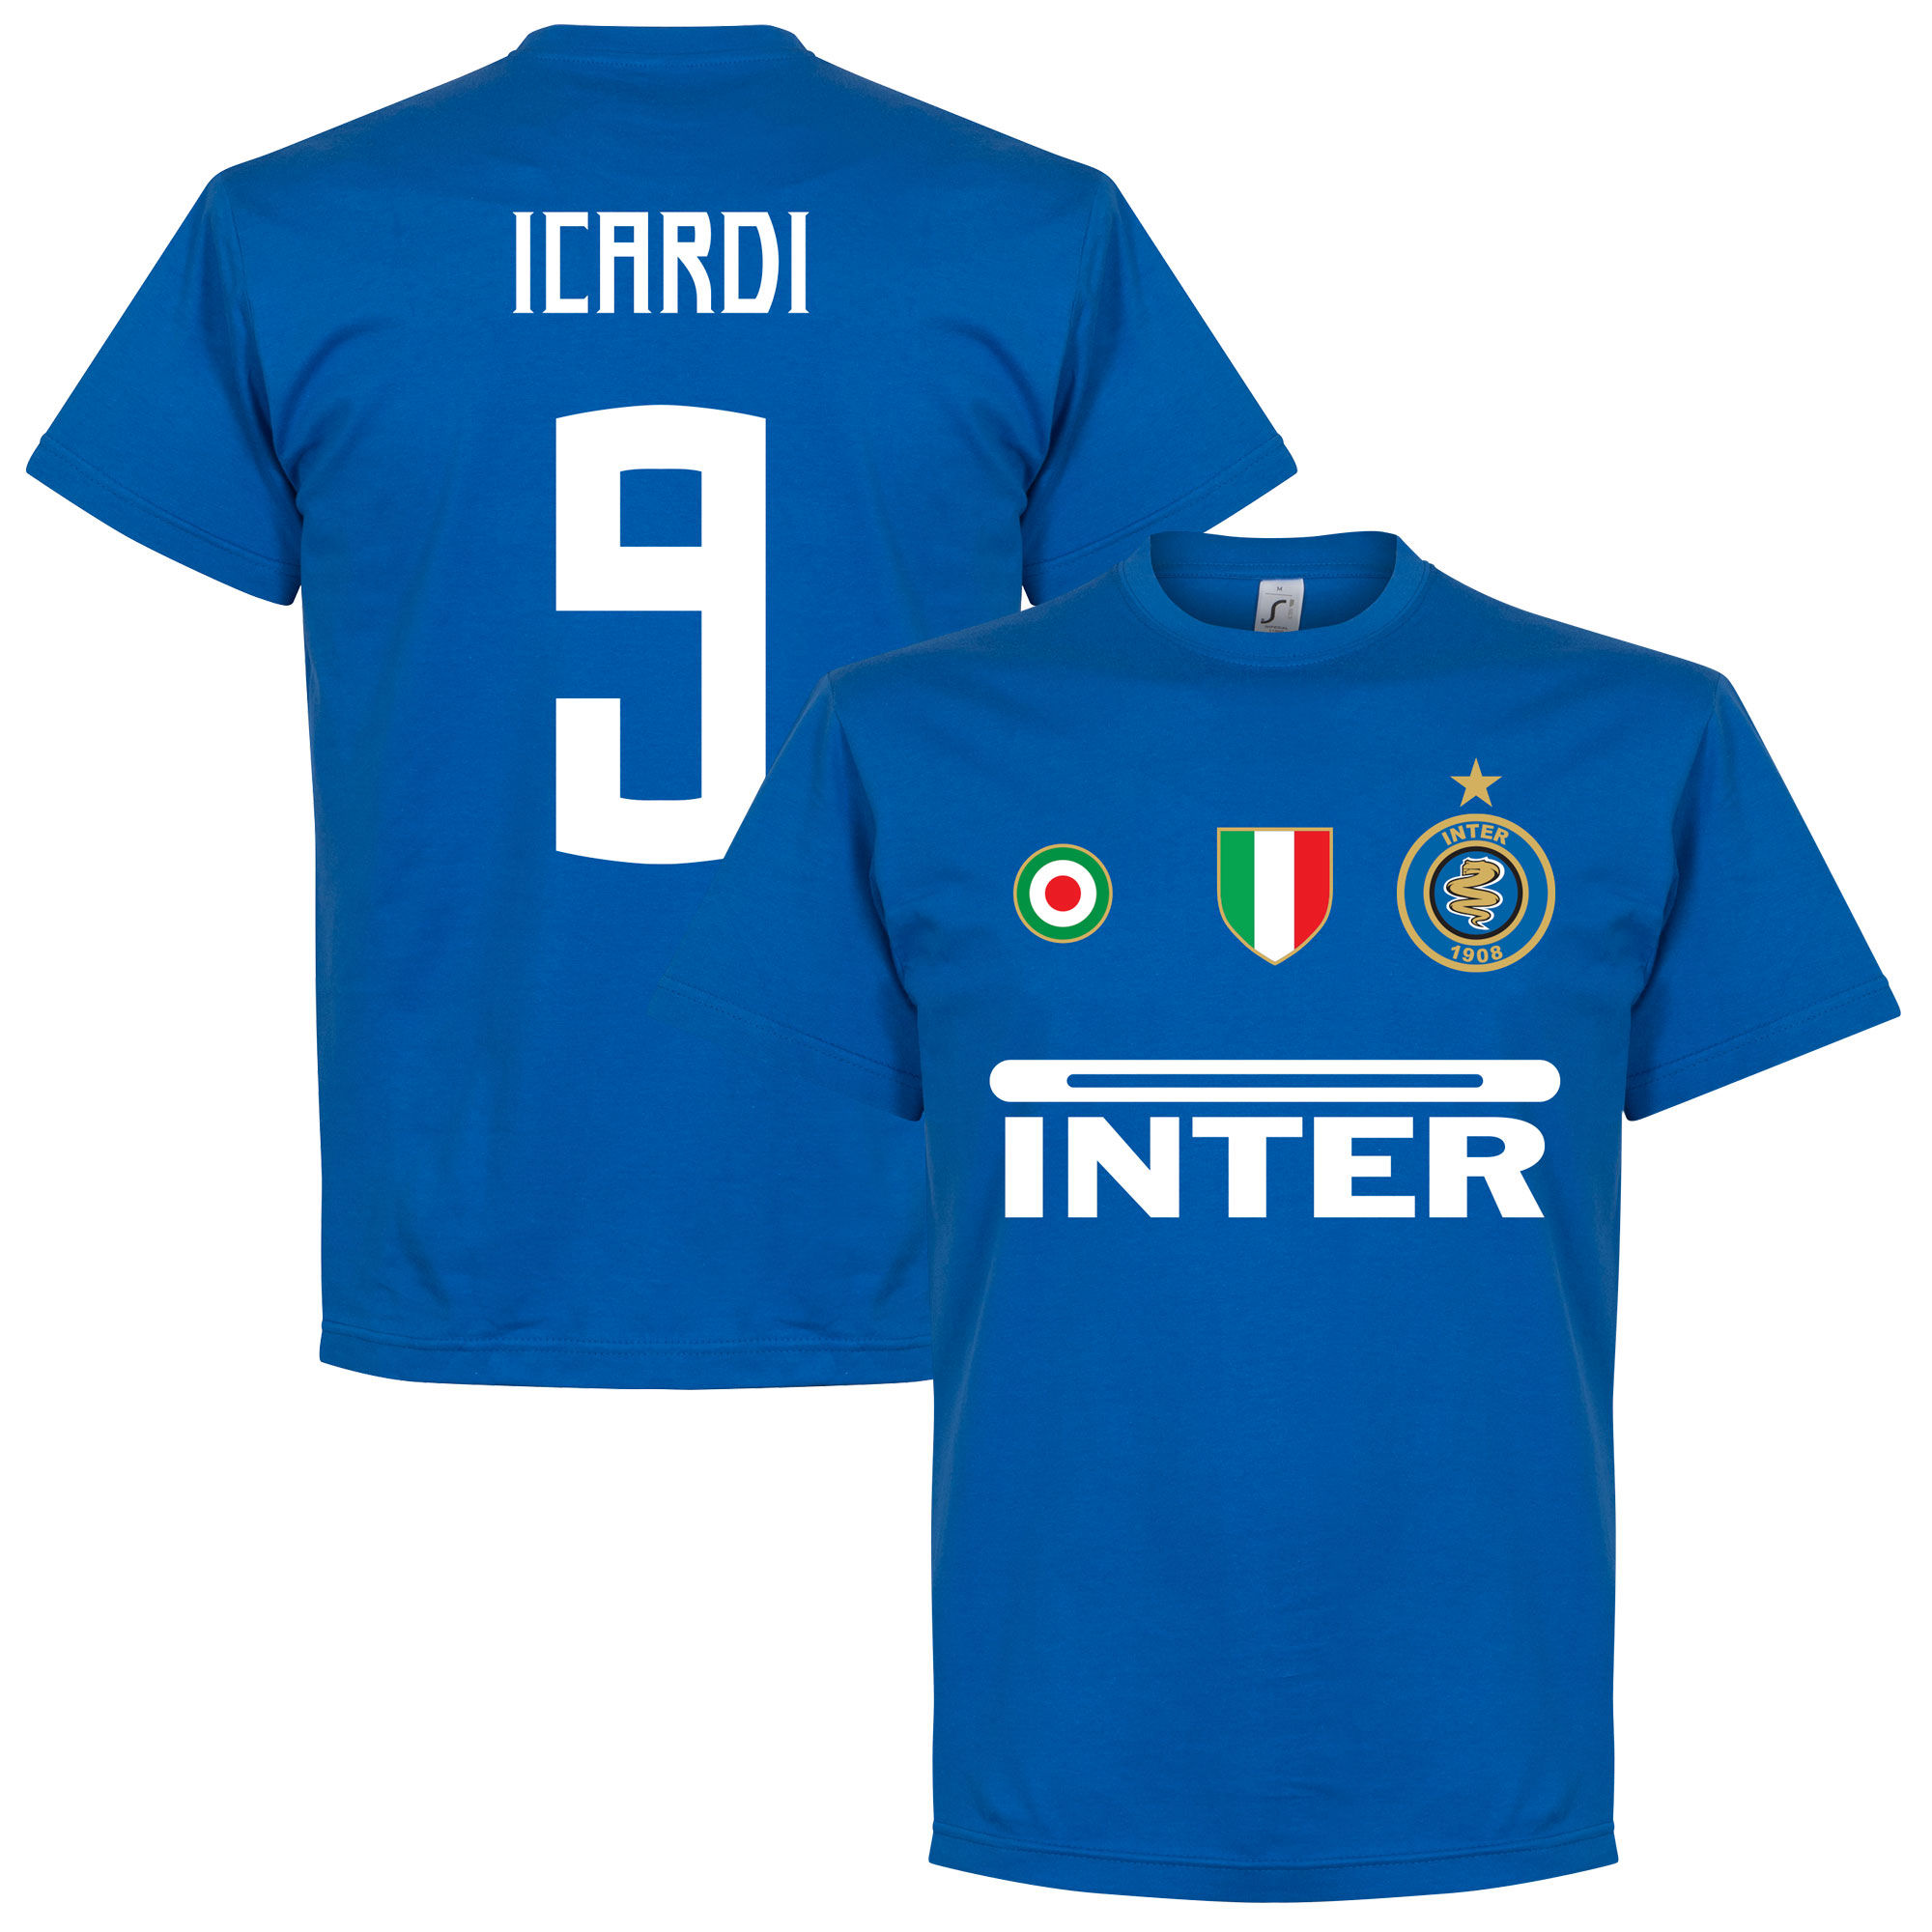 FC Inter Milán - Tričko - Mauro Icardi, číslo 9, modré